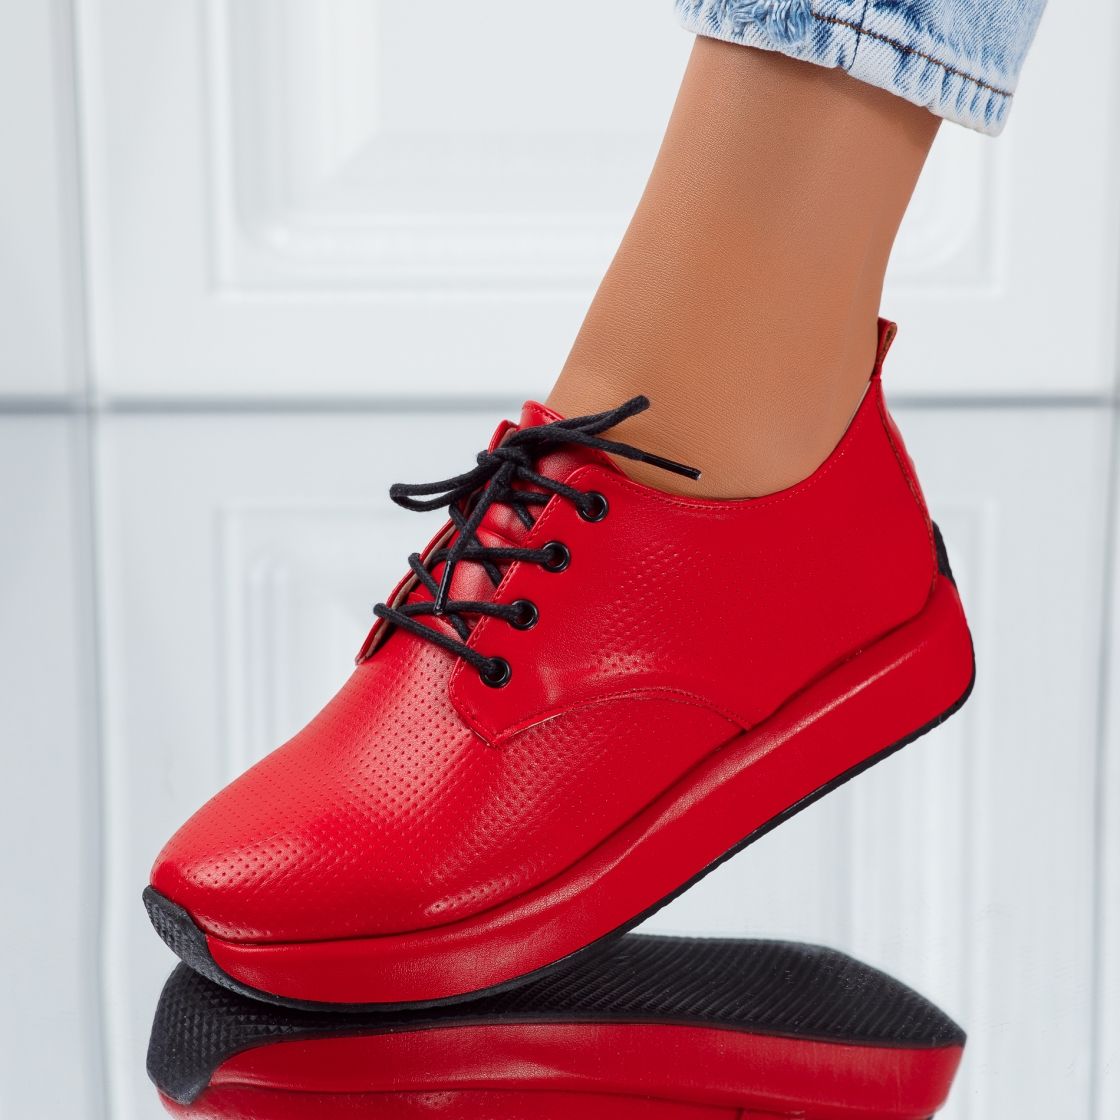 Pantofi Casual Dama Chloe Rosii #5081M